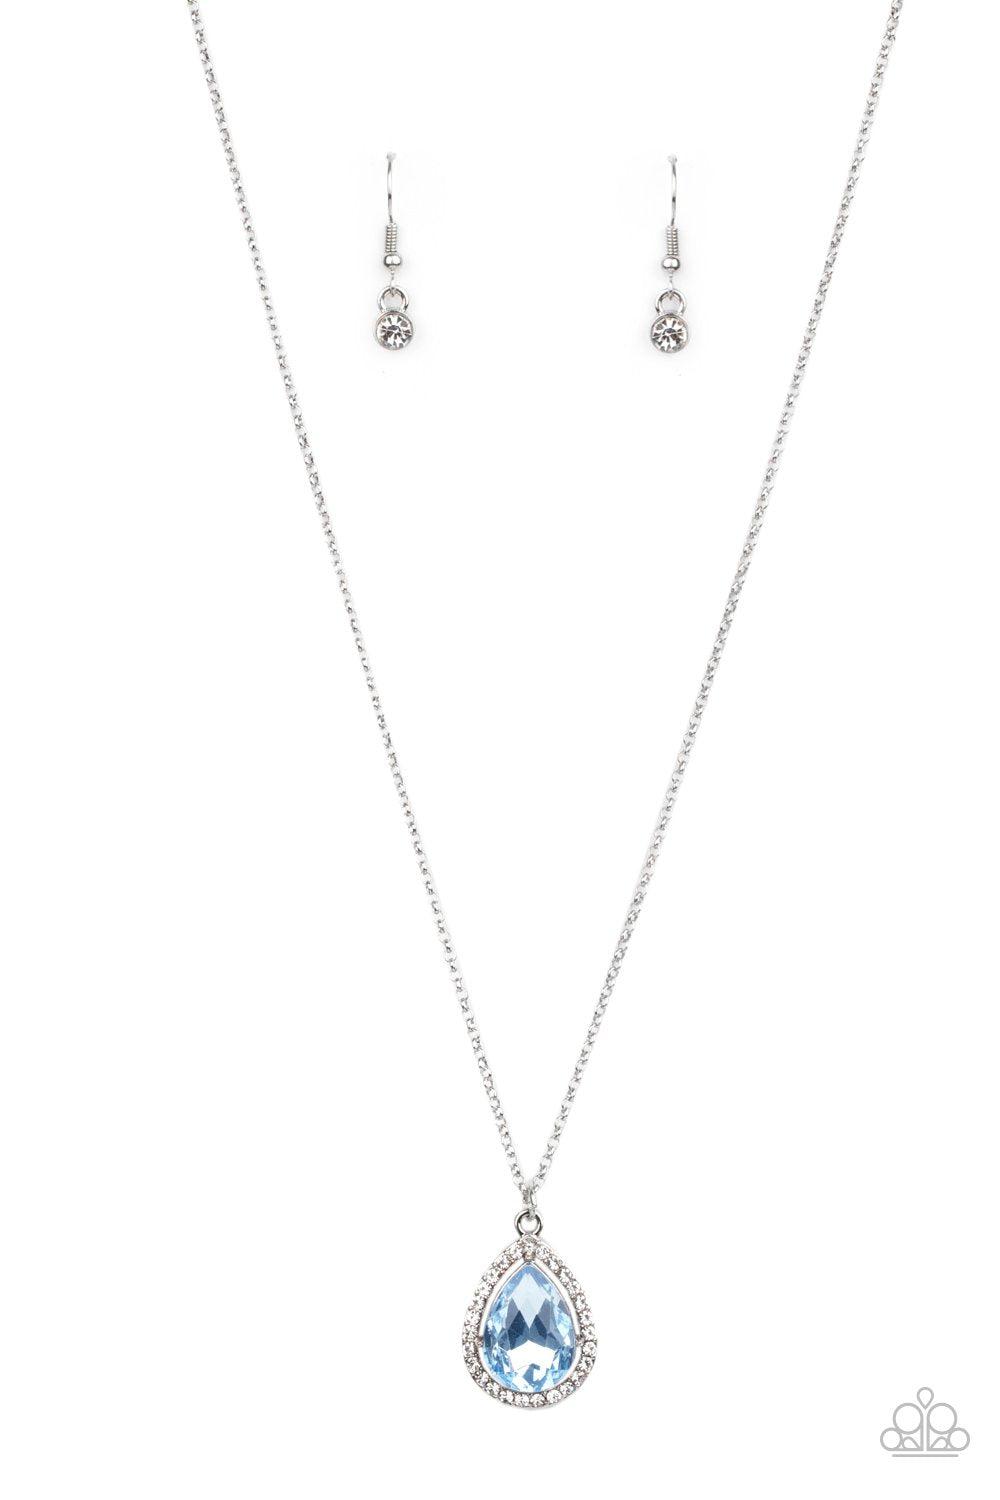 Duchess Decorum Blue Rhinestone Teardrop Pendant Necklace - Paparazzi Accessories- lightbox - CarasShop.com - $5 Jewelry by Cara Jewels